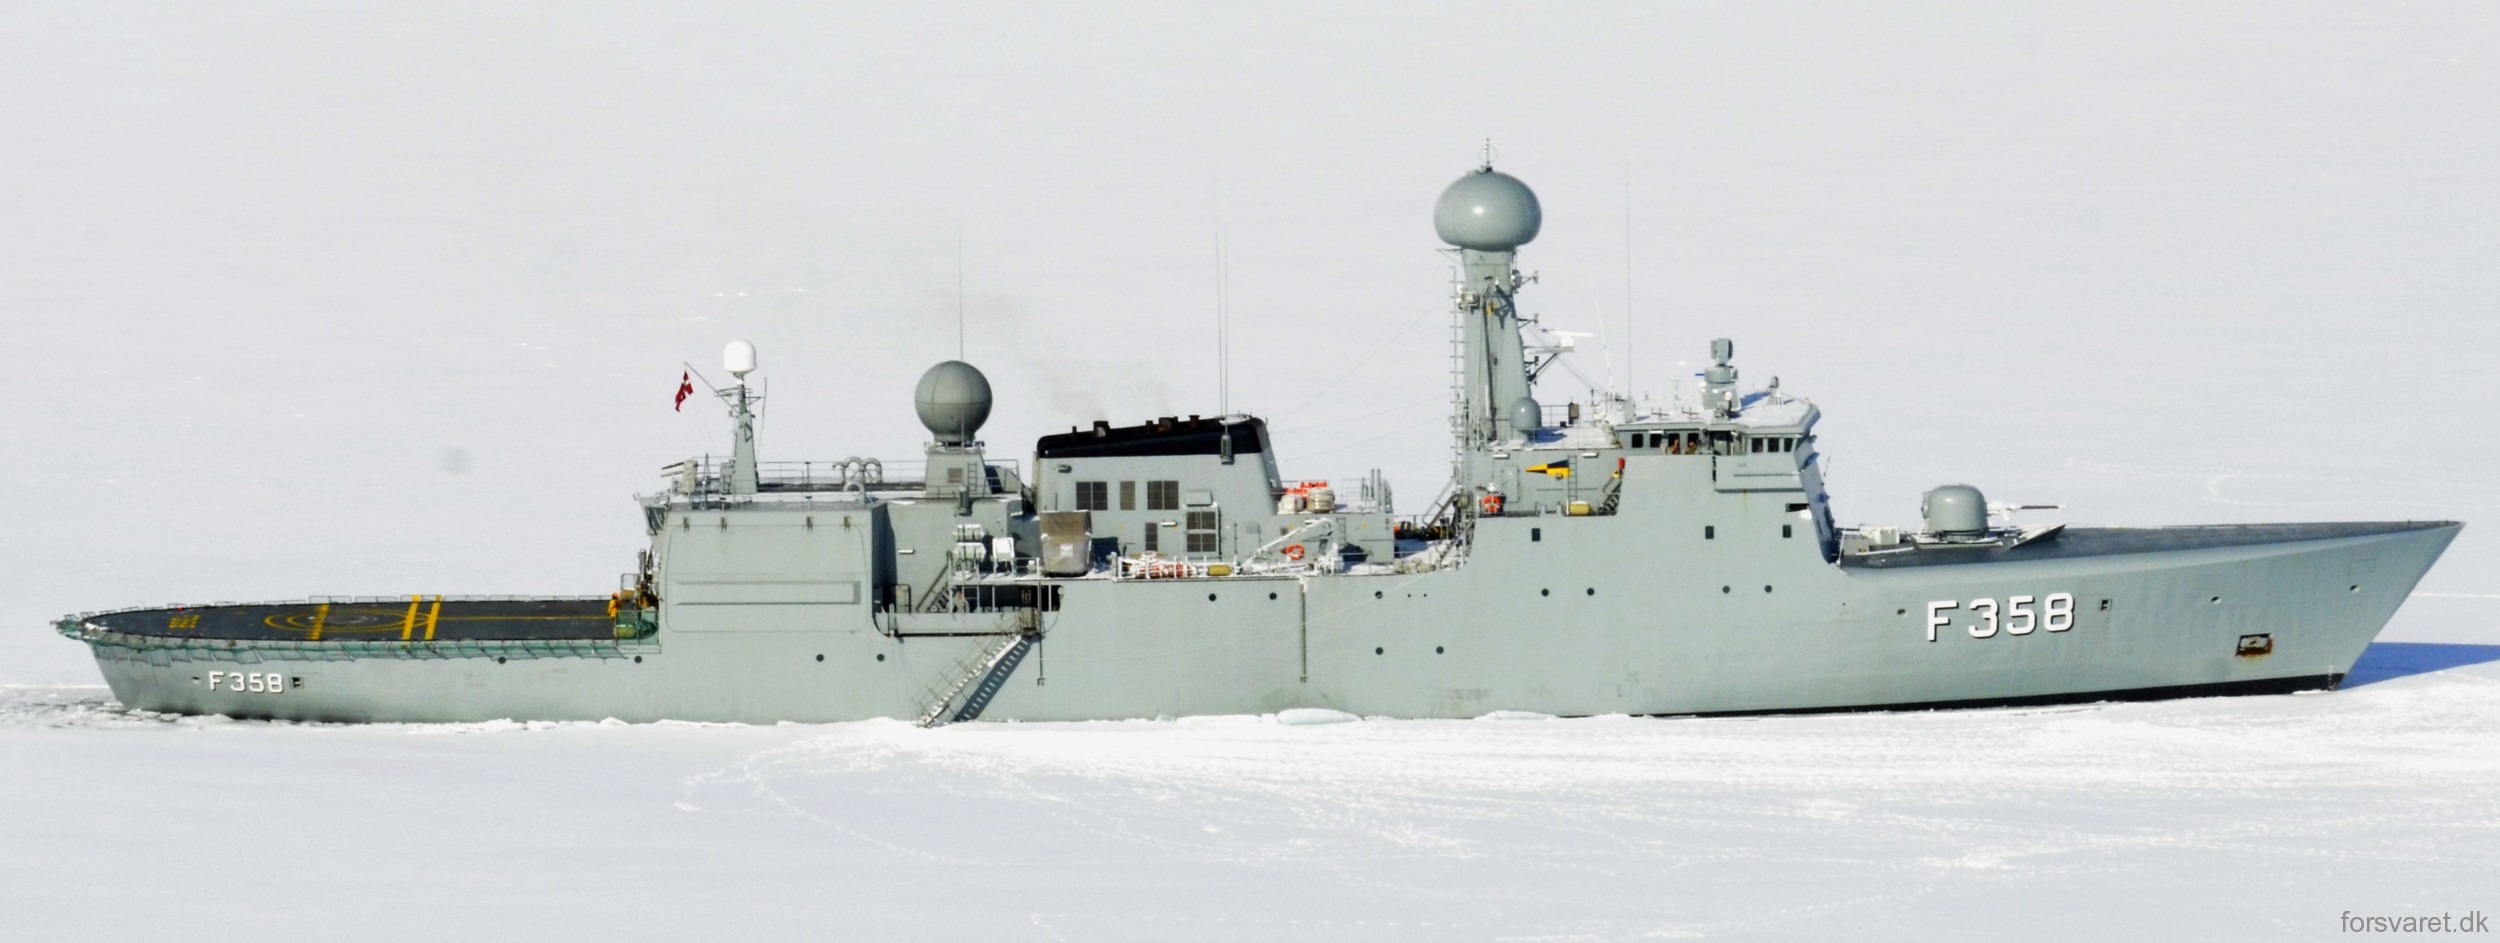 f-358 hdms triton thetis class ocean patrol frigate royal danish navy kongelige danske marine kdm inspektionsskibet 02